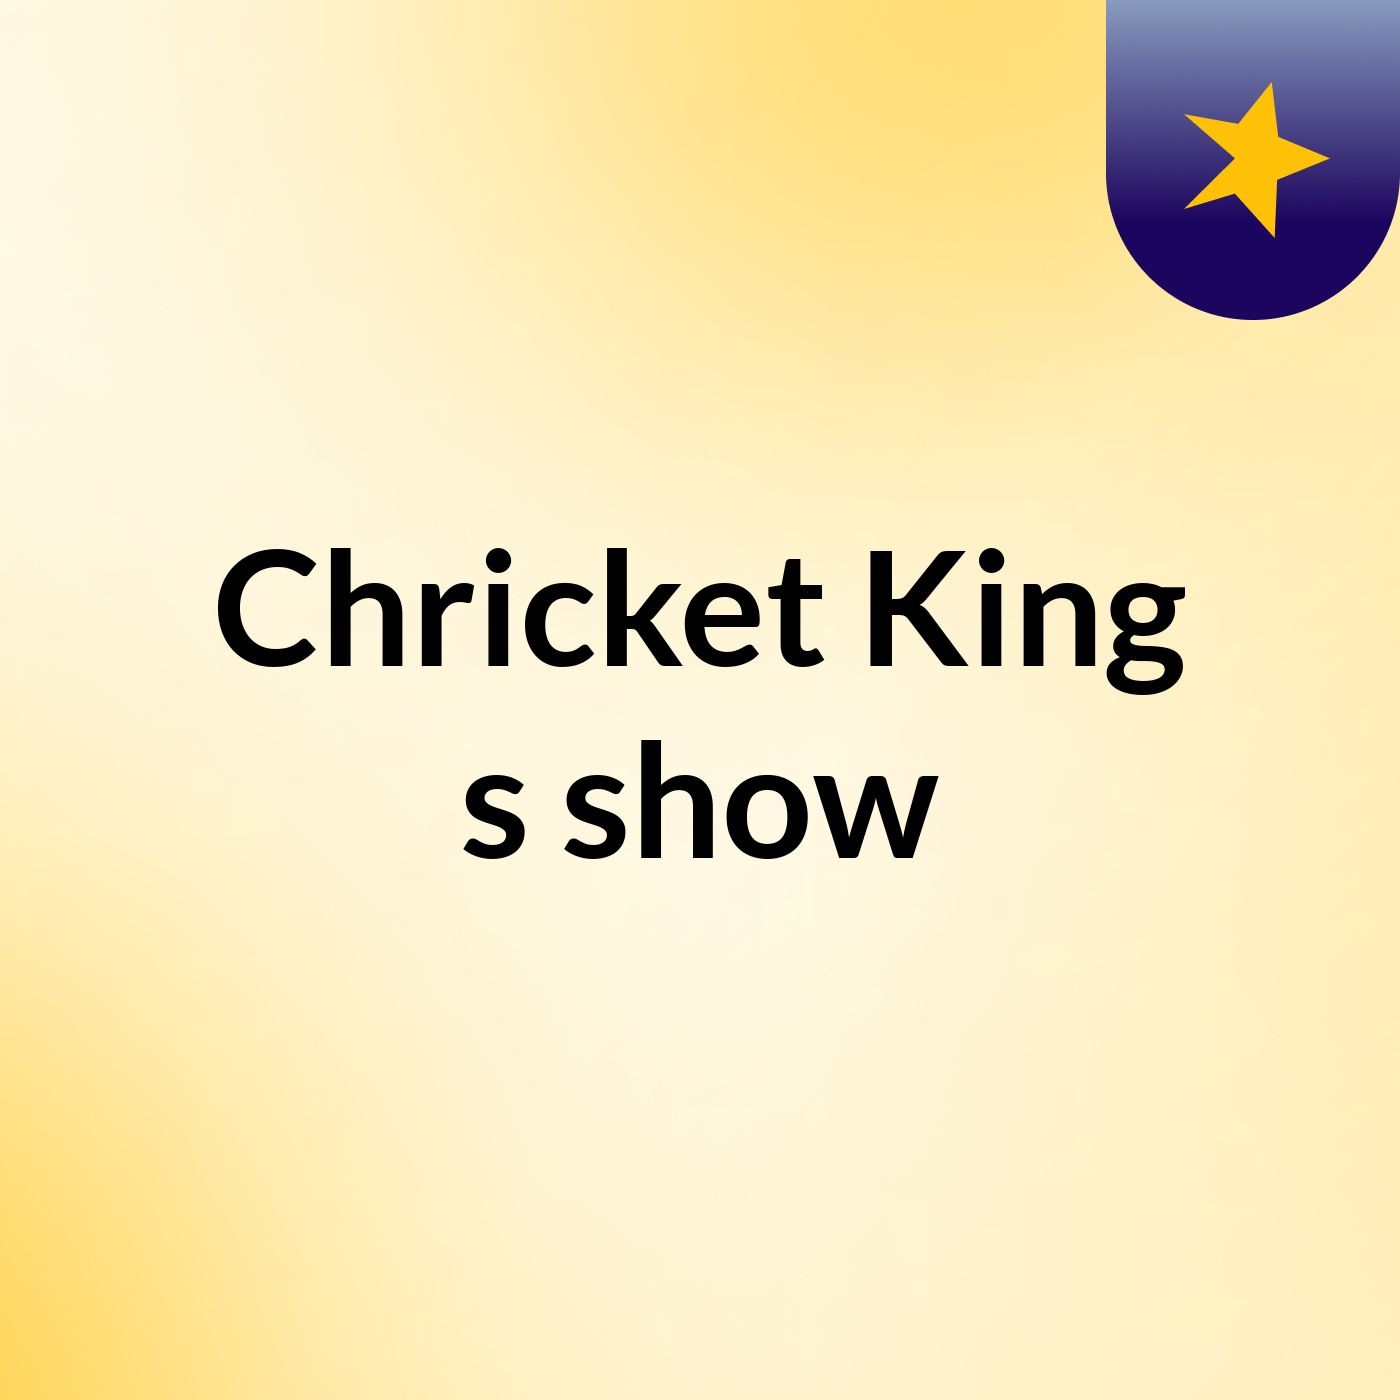 Chricket King's show